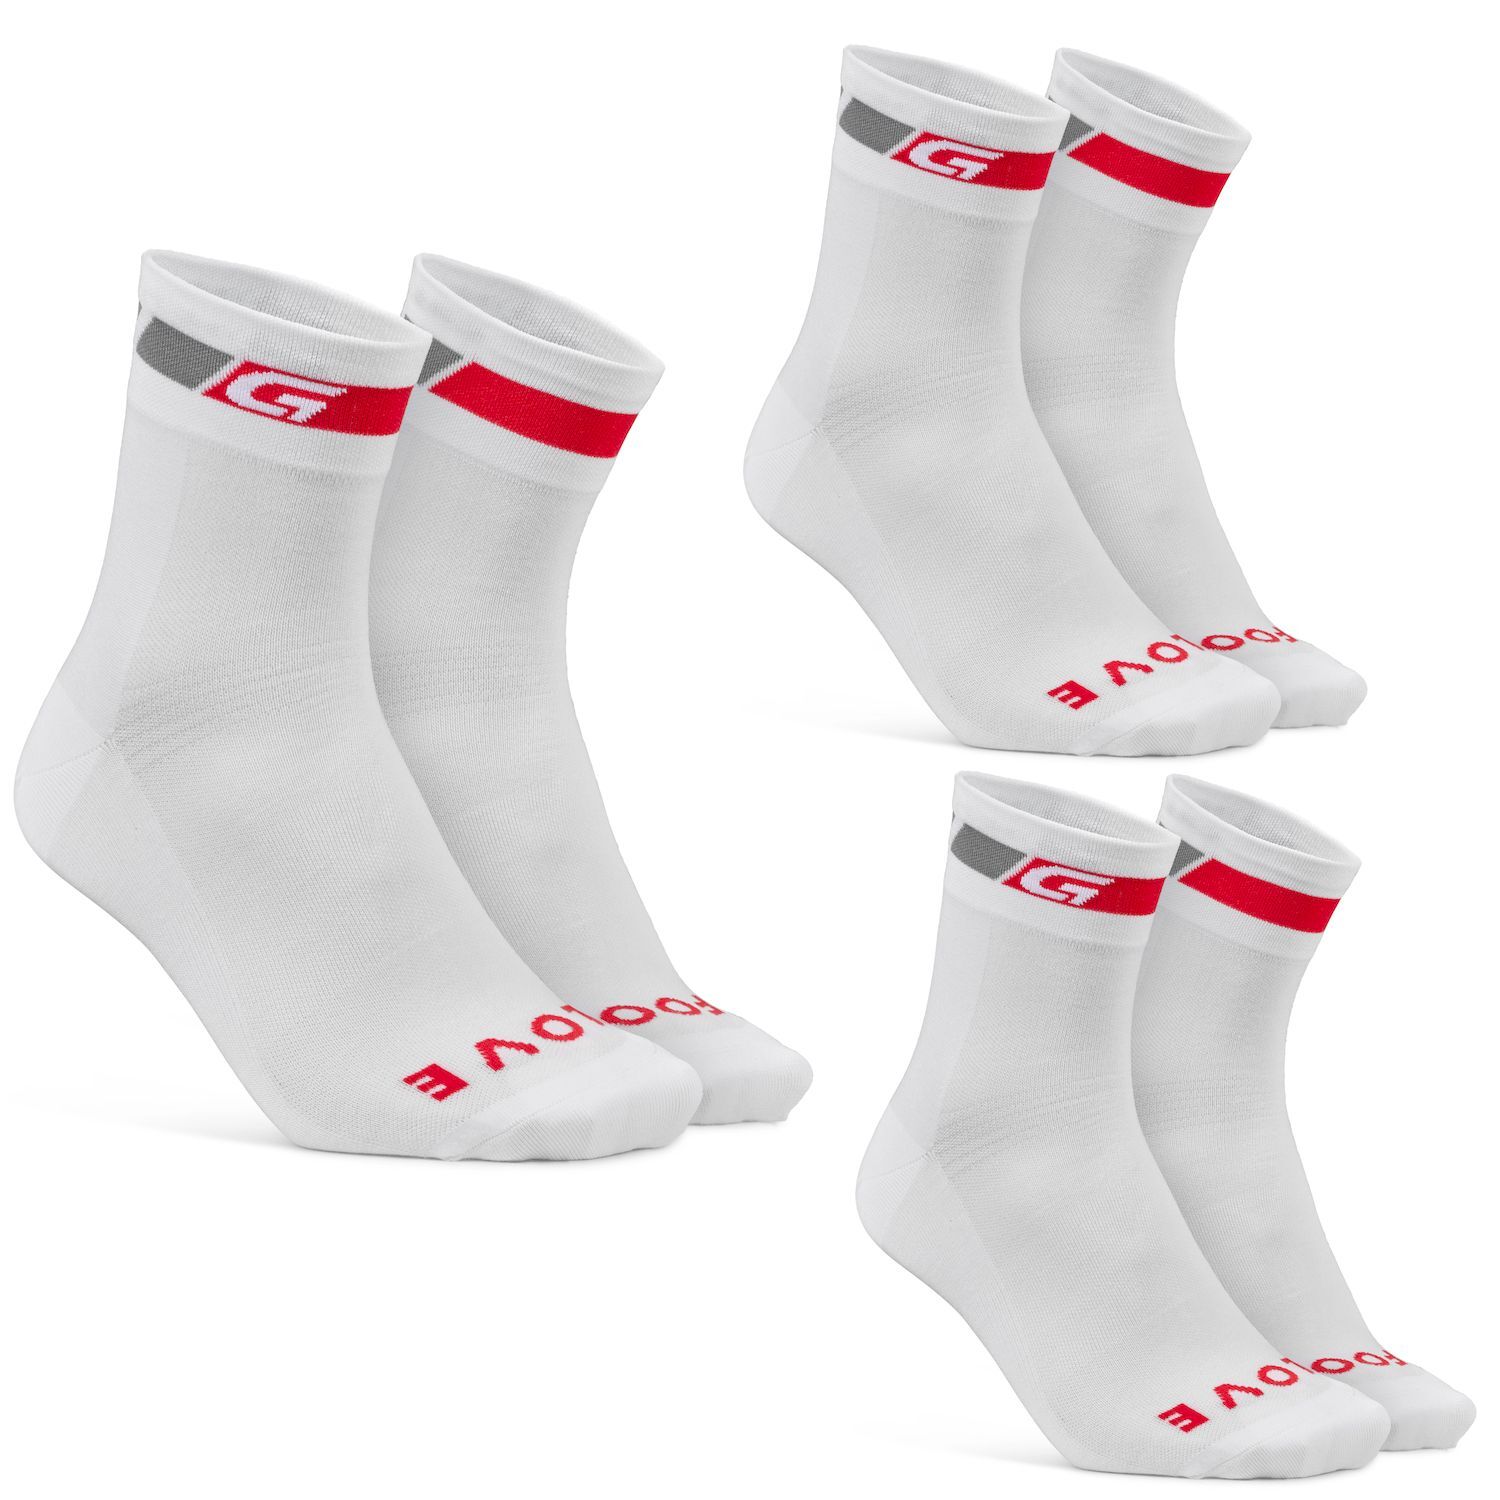 Grip Grab Classic Regular Cut Socks 3 Pack - Calcetines ciclismo